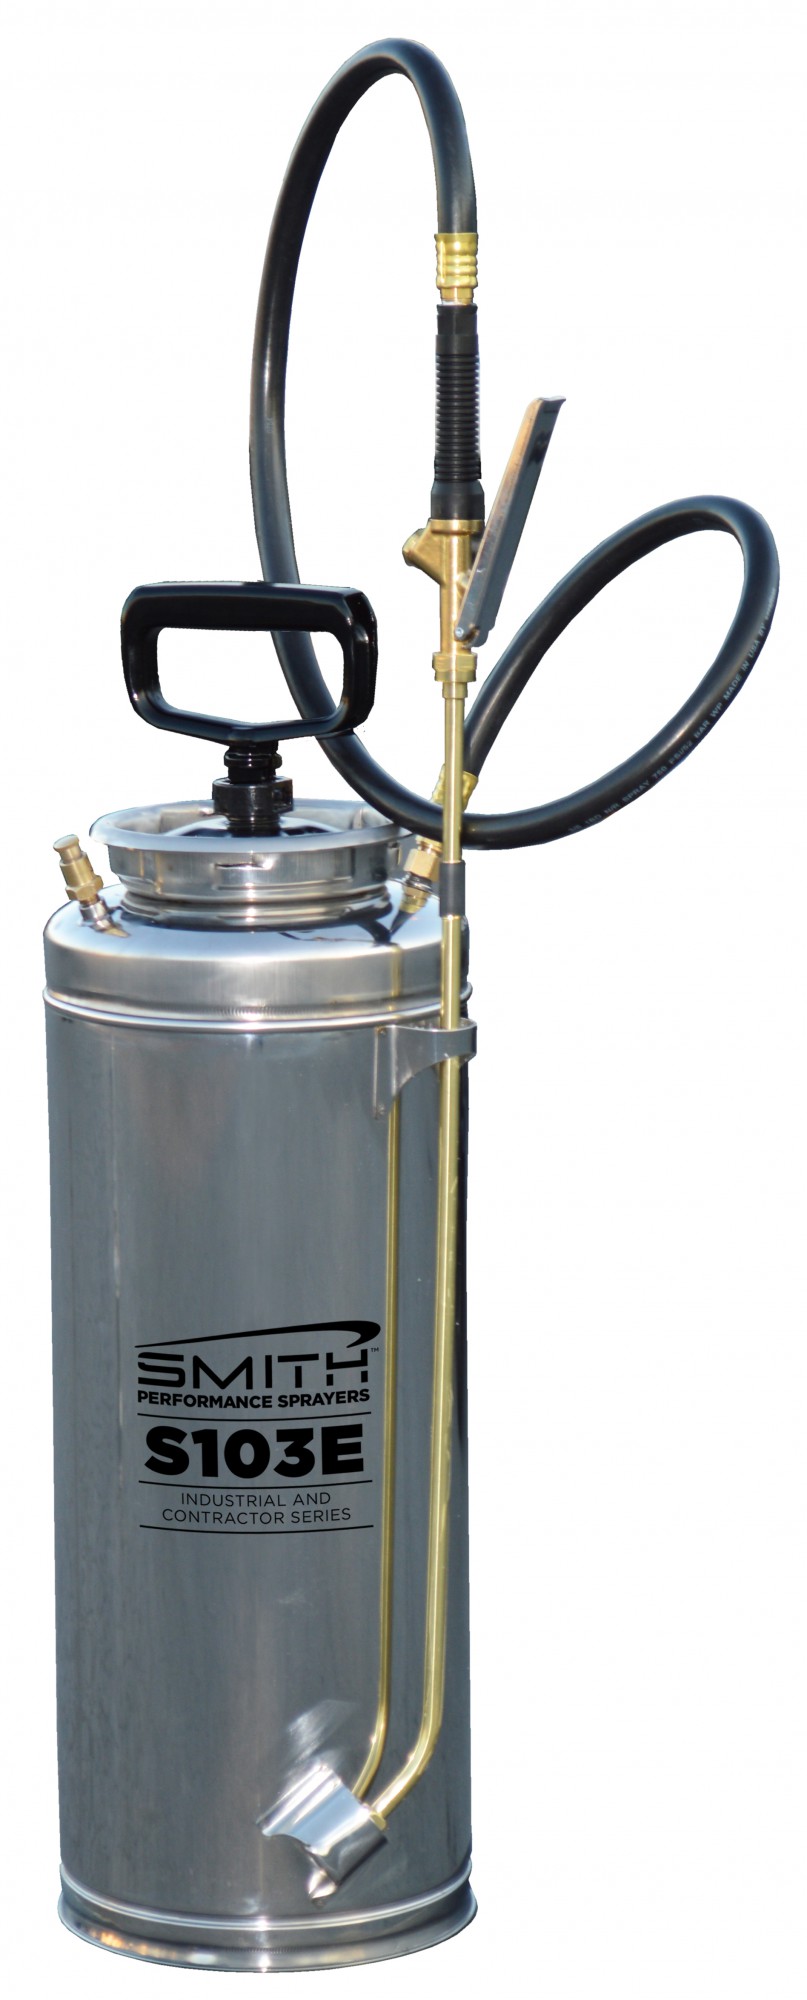 Smith Performance Sprayers Concrete Sprayer S103E 3.5 Gallon Stainless Steel